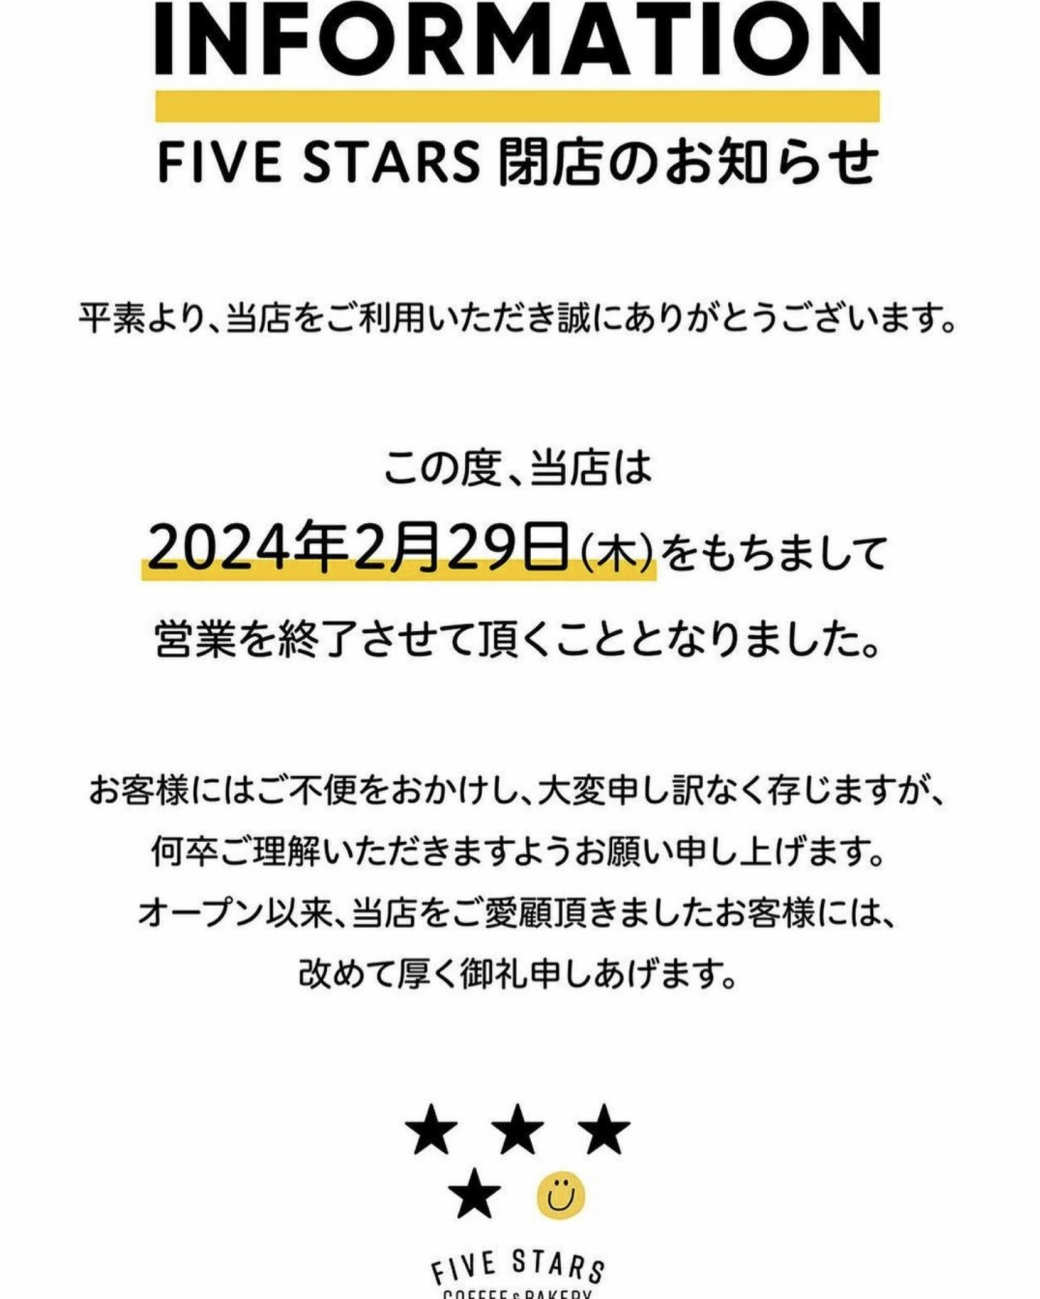 FIVE STARS coffee and bakery 閉店のお知らせ